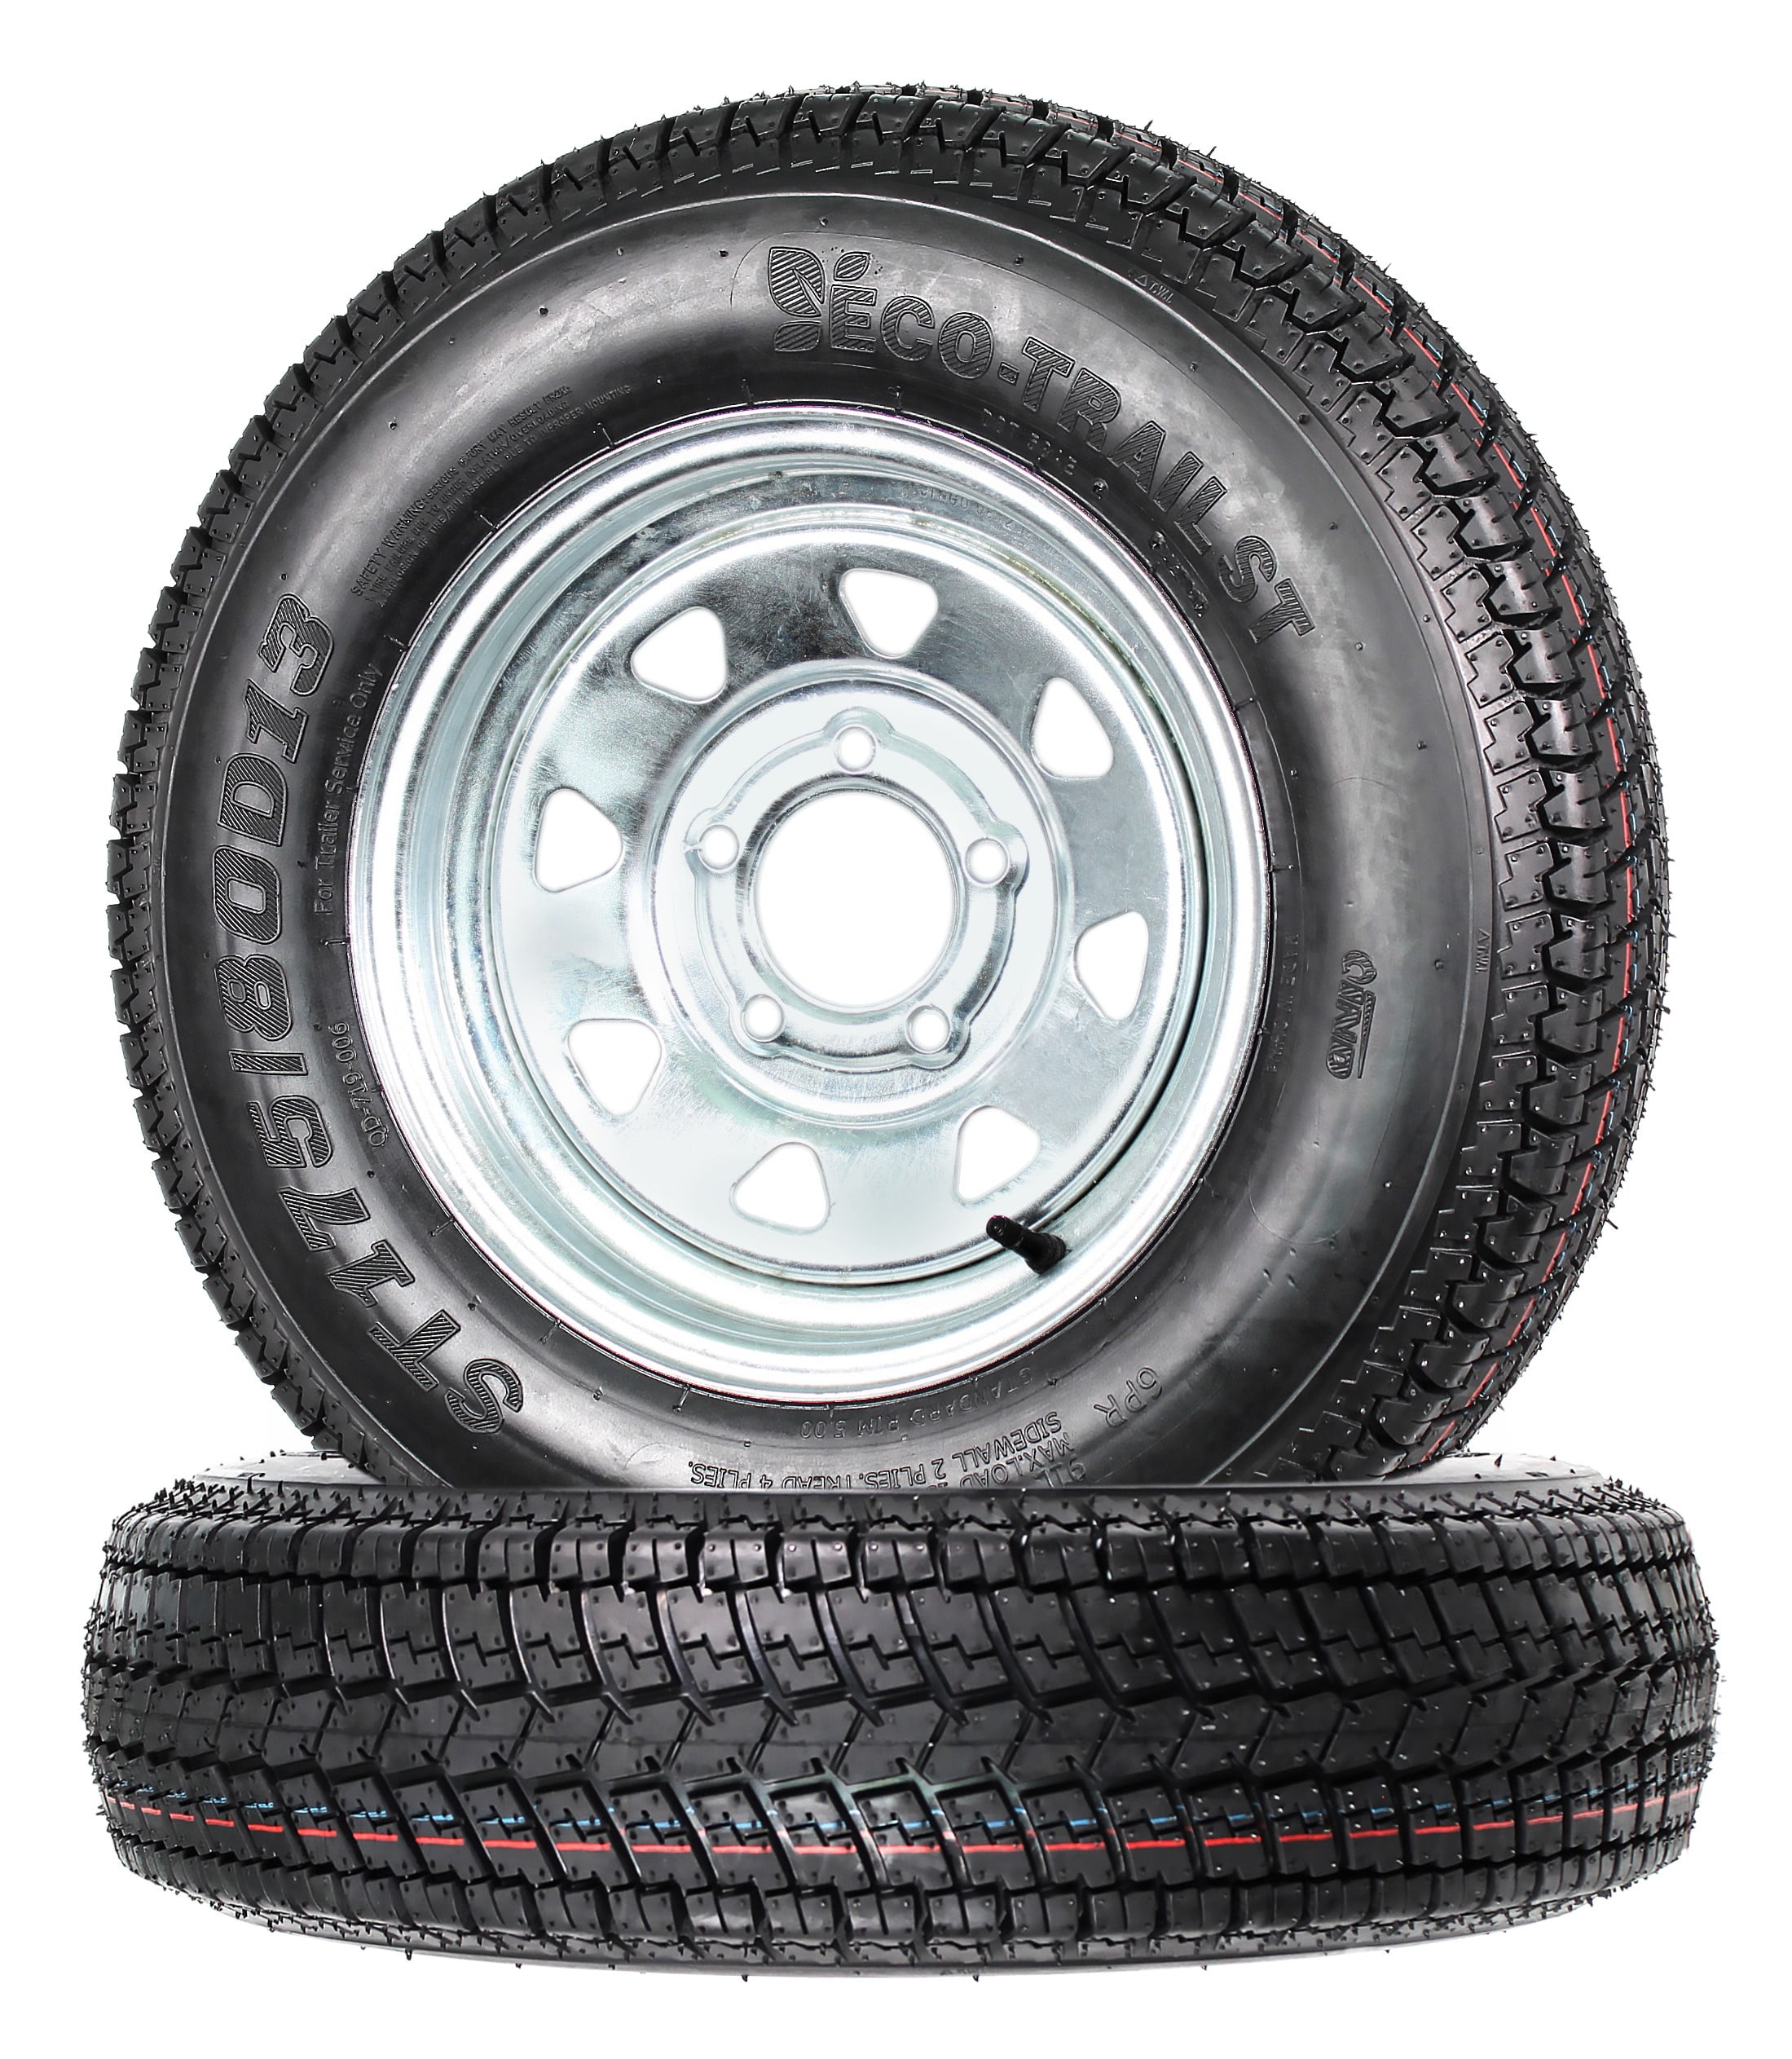 13" Kenda LoadStar K550 Trailer Tire LR C 6 ply Tires Wheel ST175/80D13 